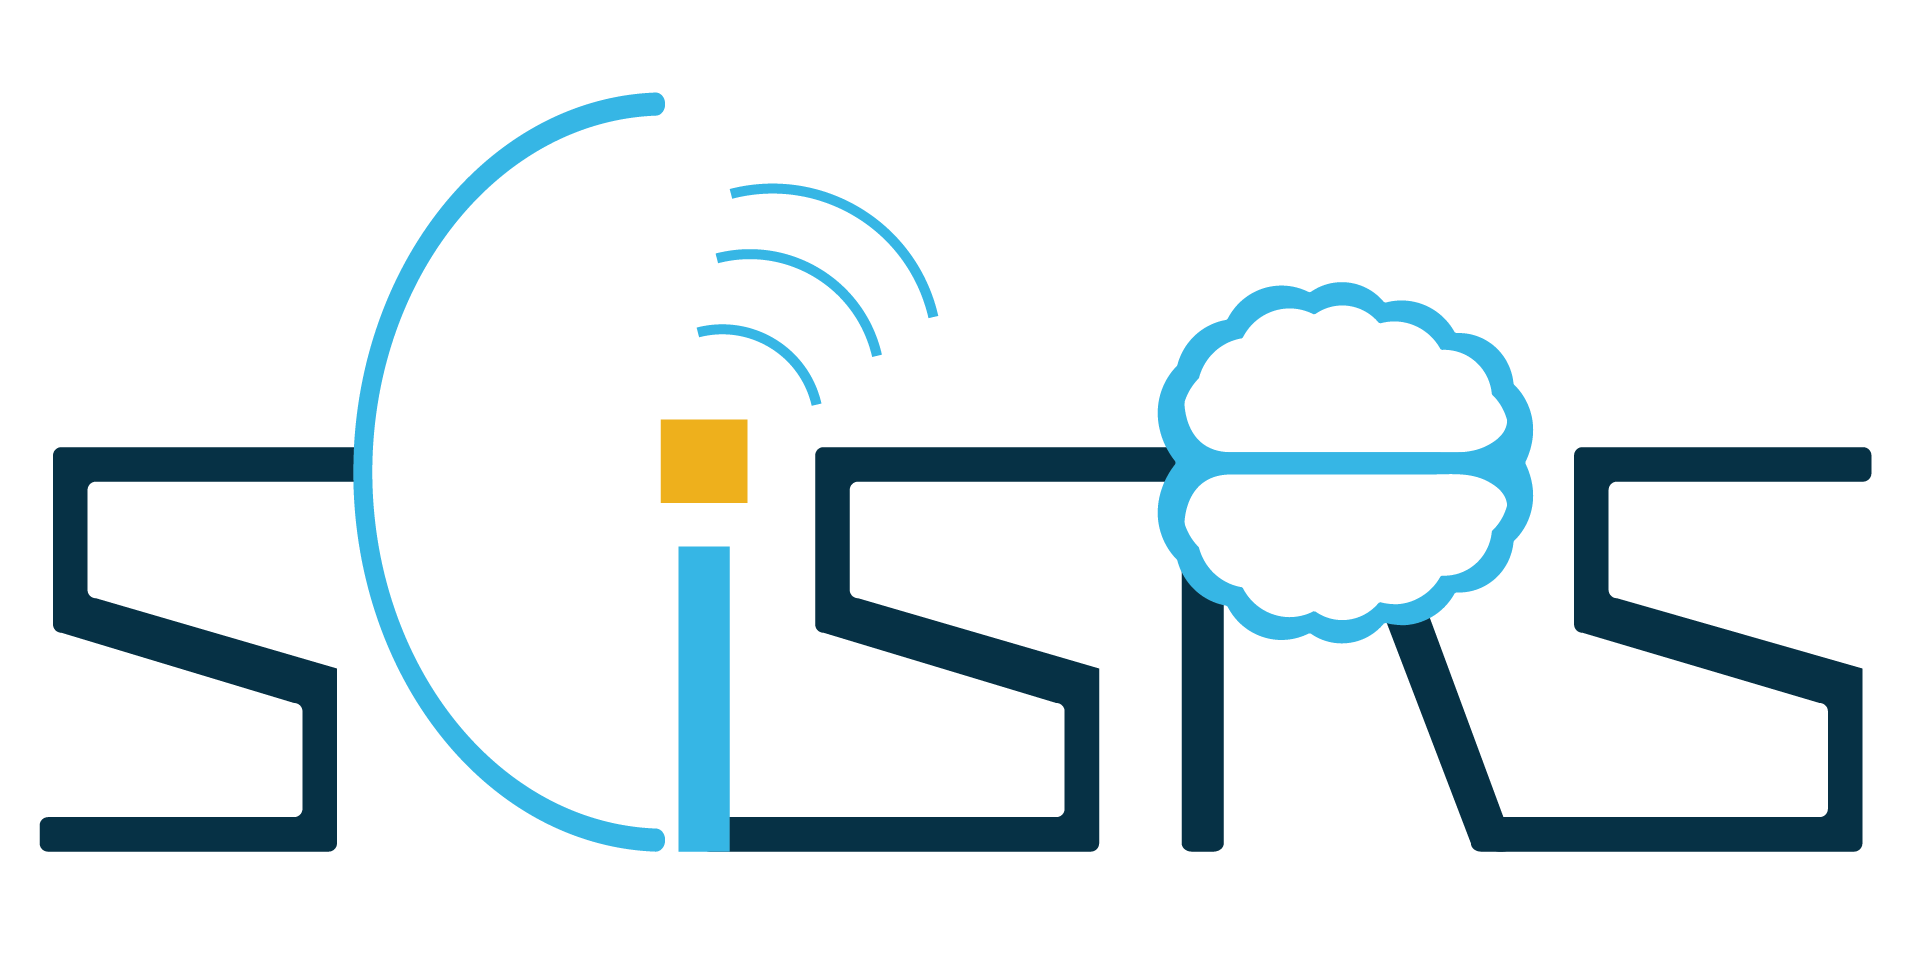 SCISRS Logo